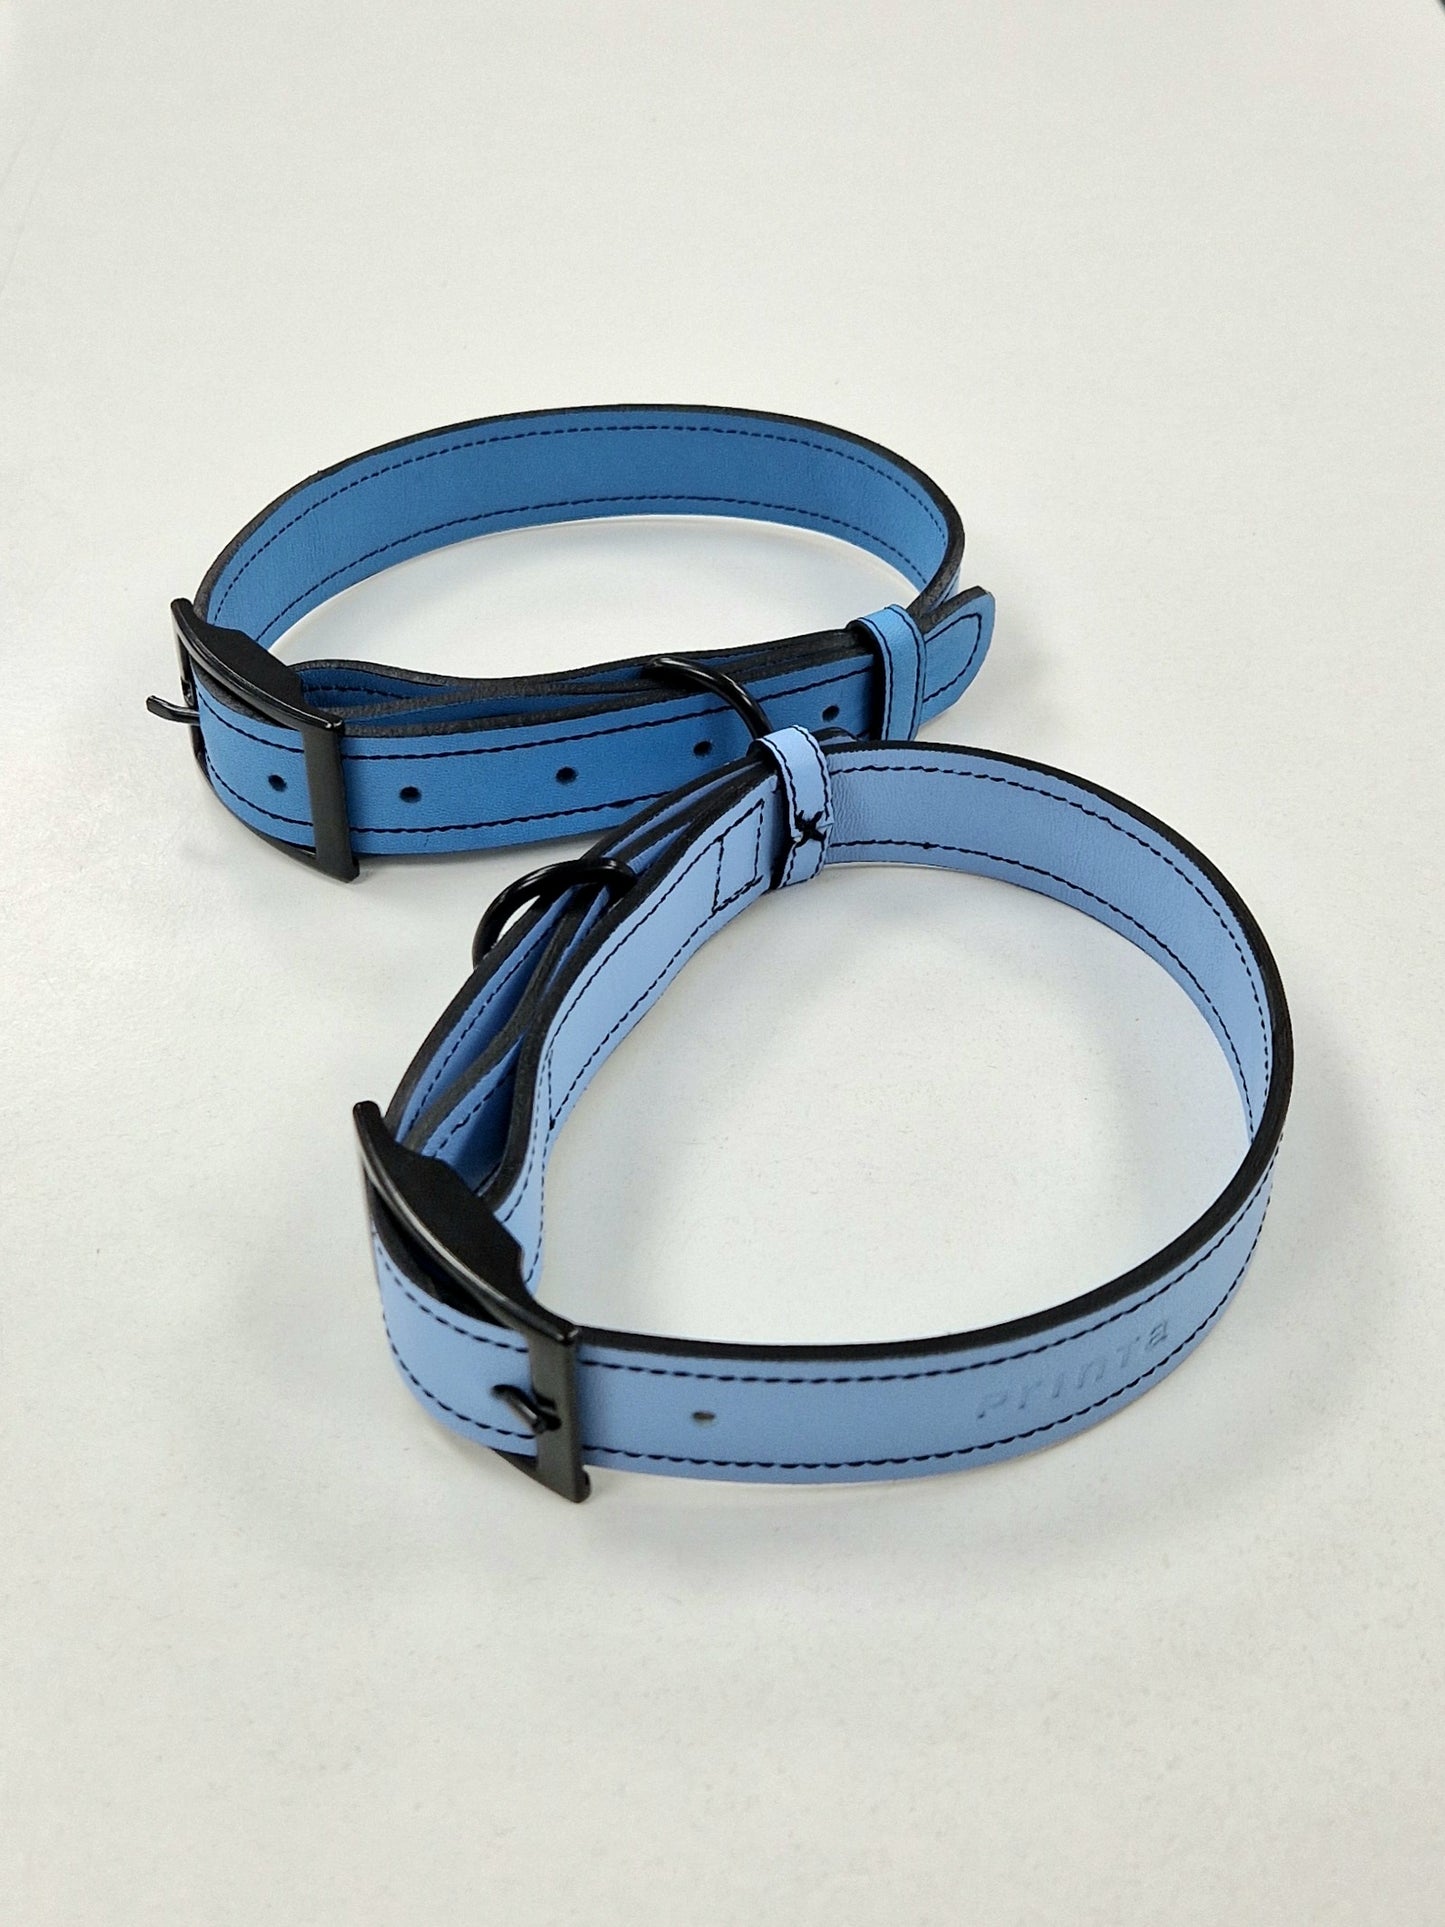 blue leather dog's collar